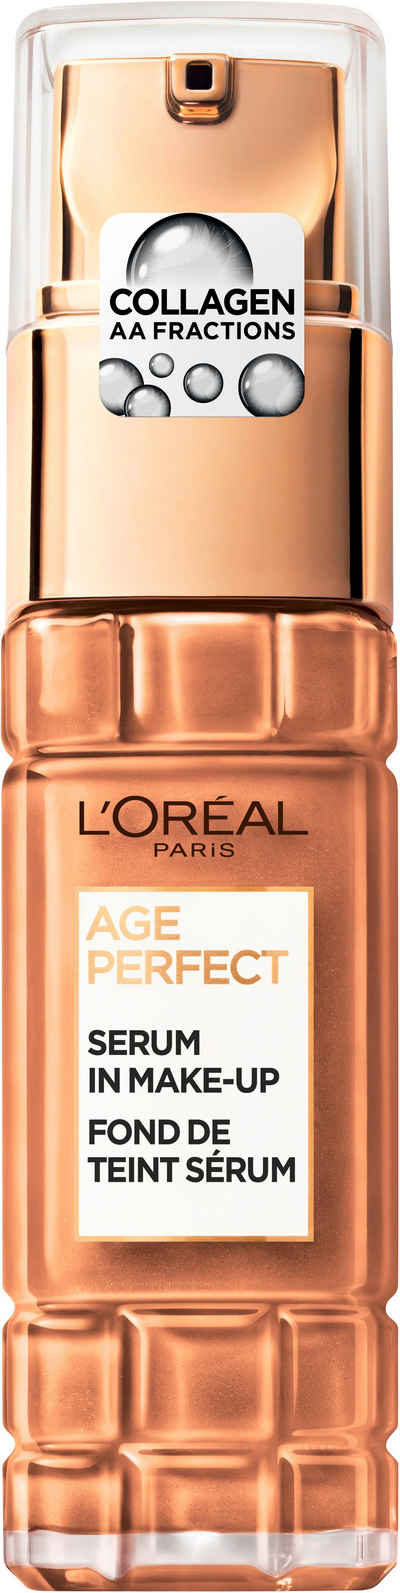 L'ORÉAL PARIS Make-up Age Perfect Serum in Make-up